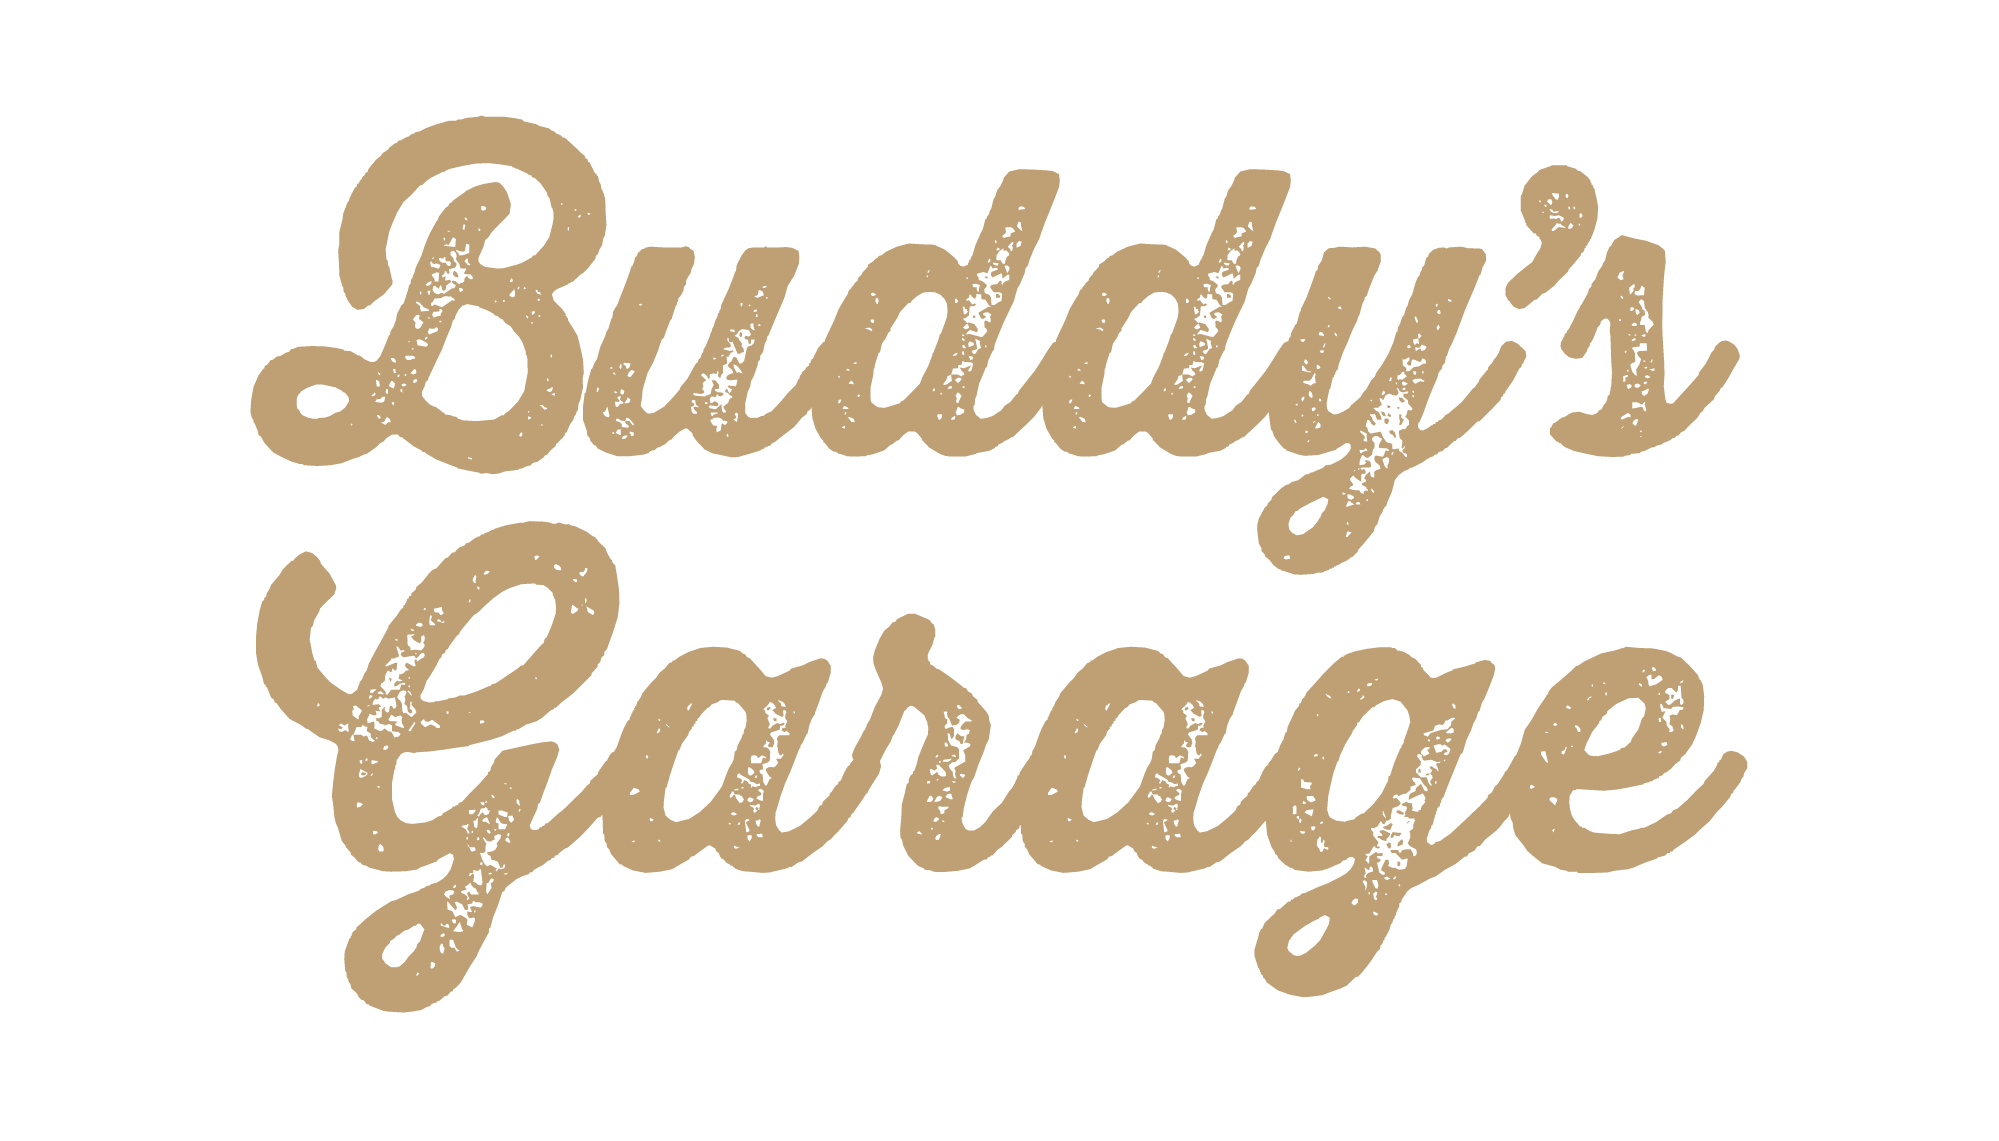 Buddy's Garage Records